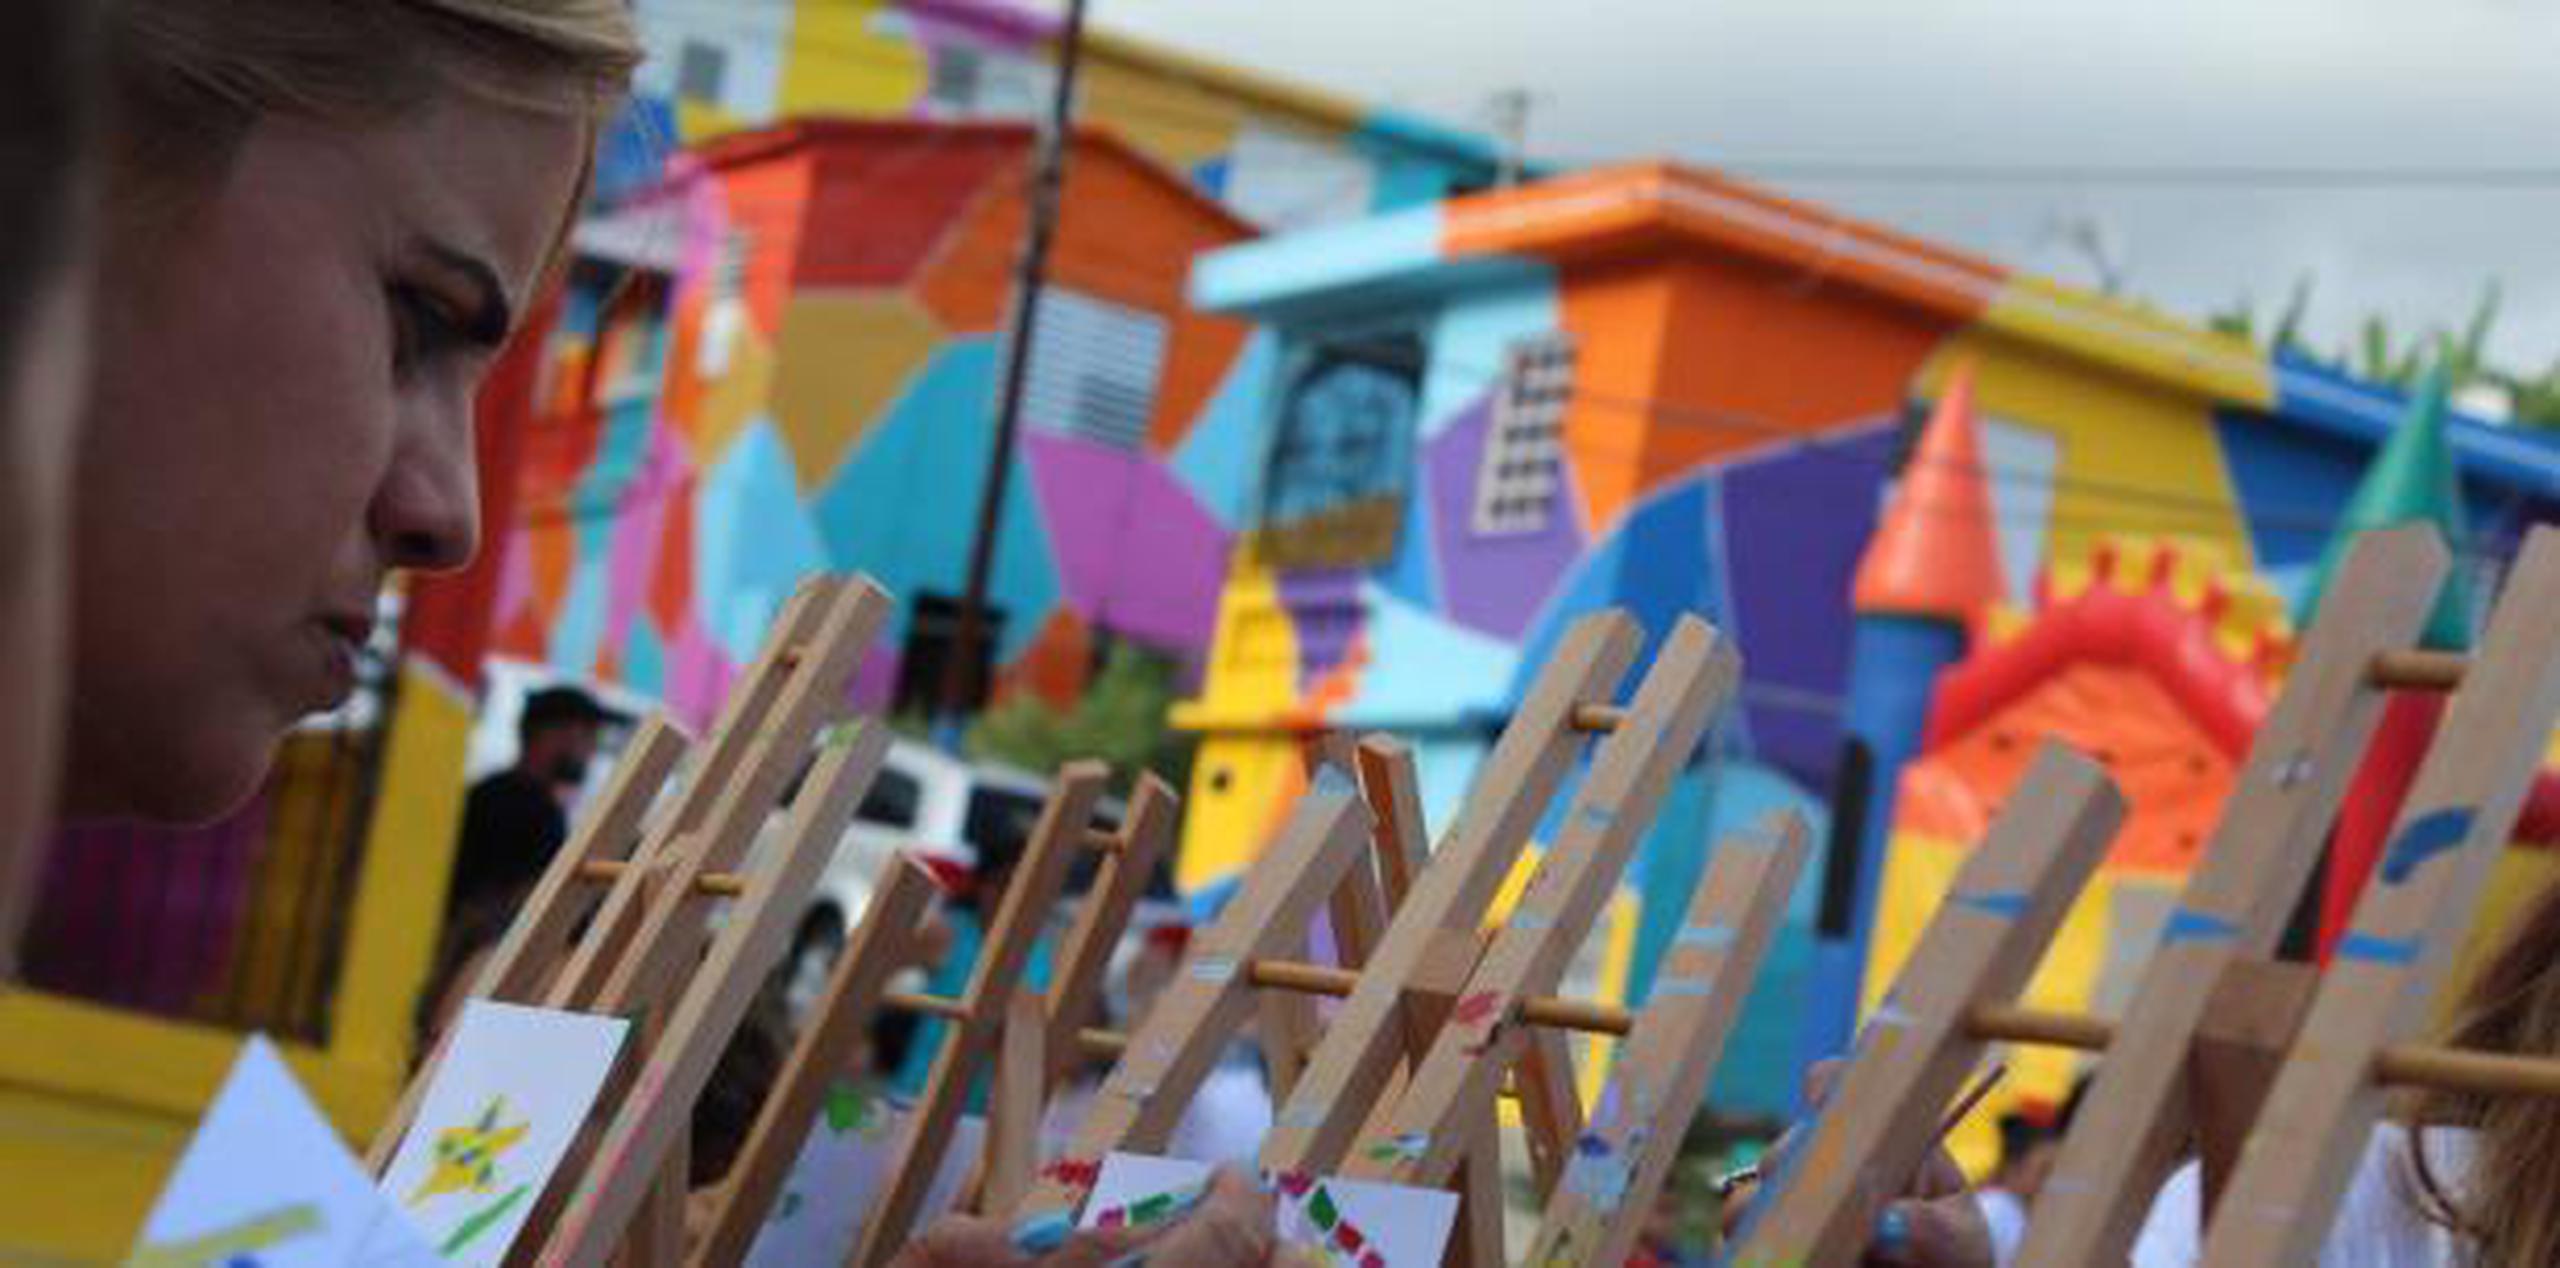 Yauco se ha convertido en un gran centro de arte urbano, que nació con el proyecto Yaucromatic. (Suministrada)